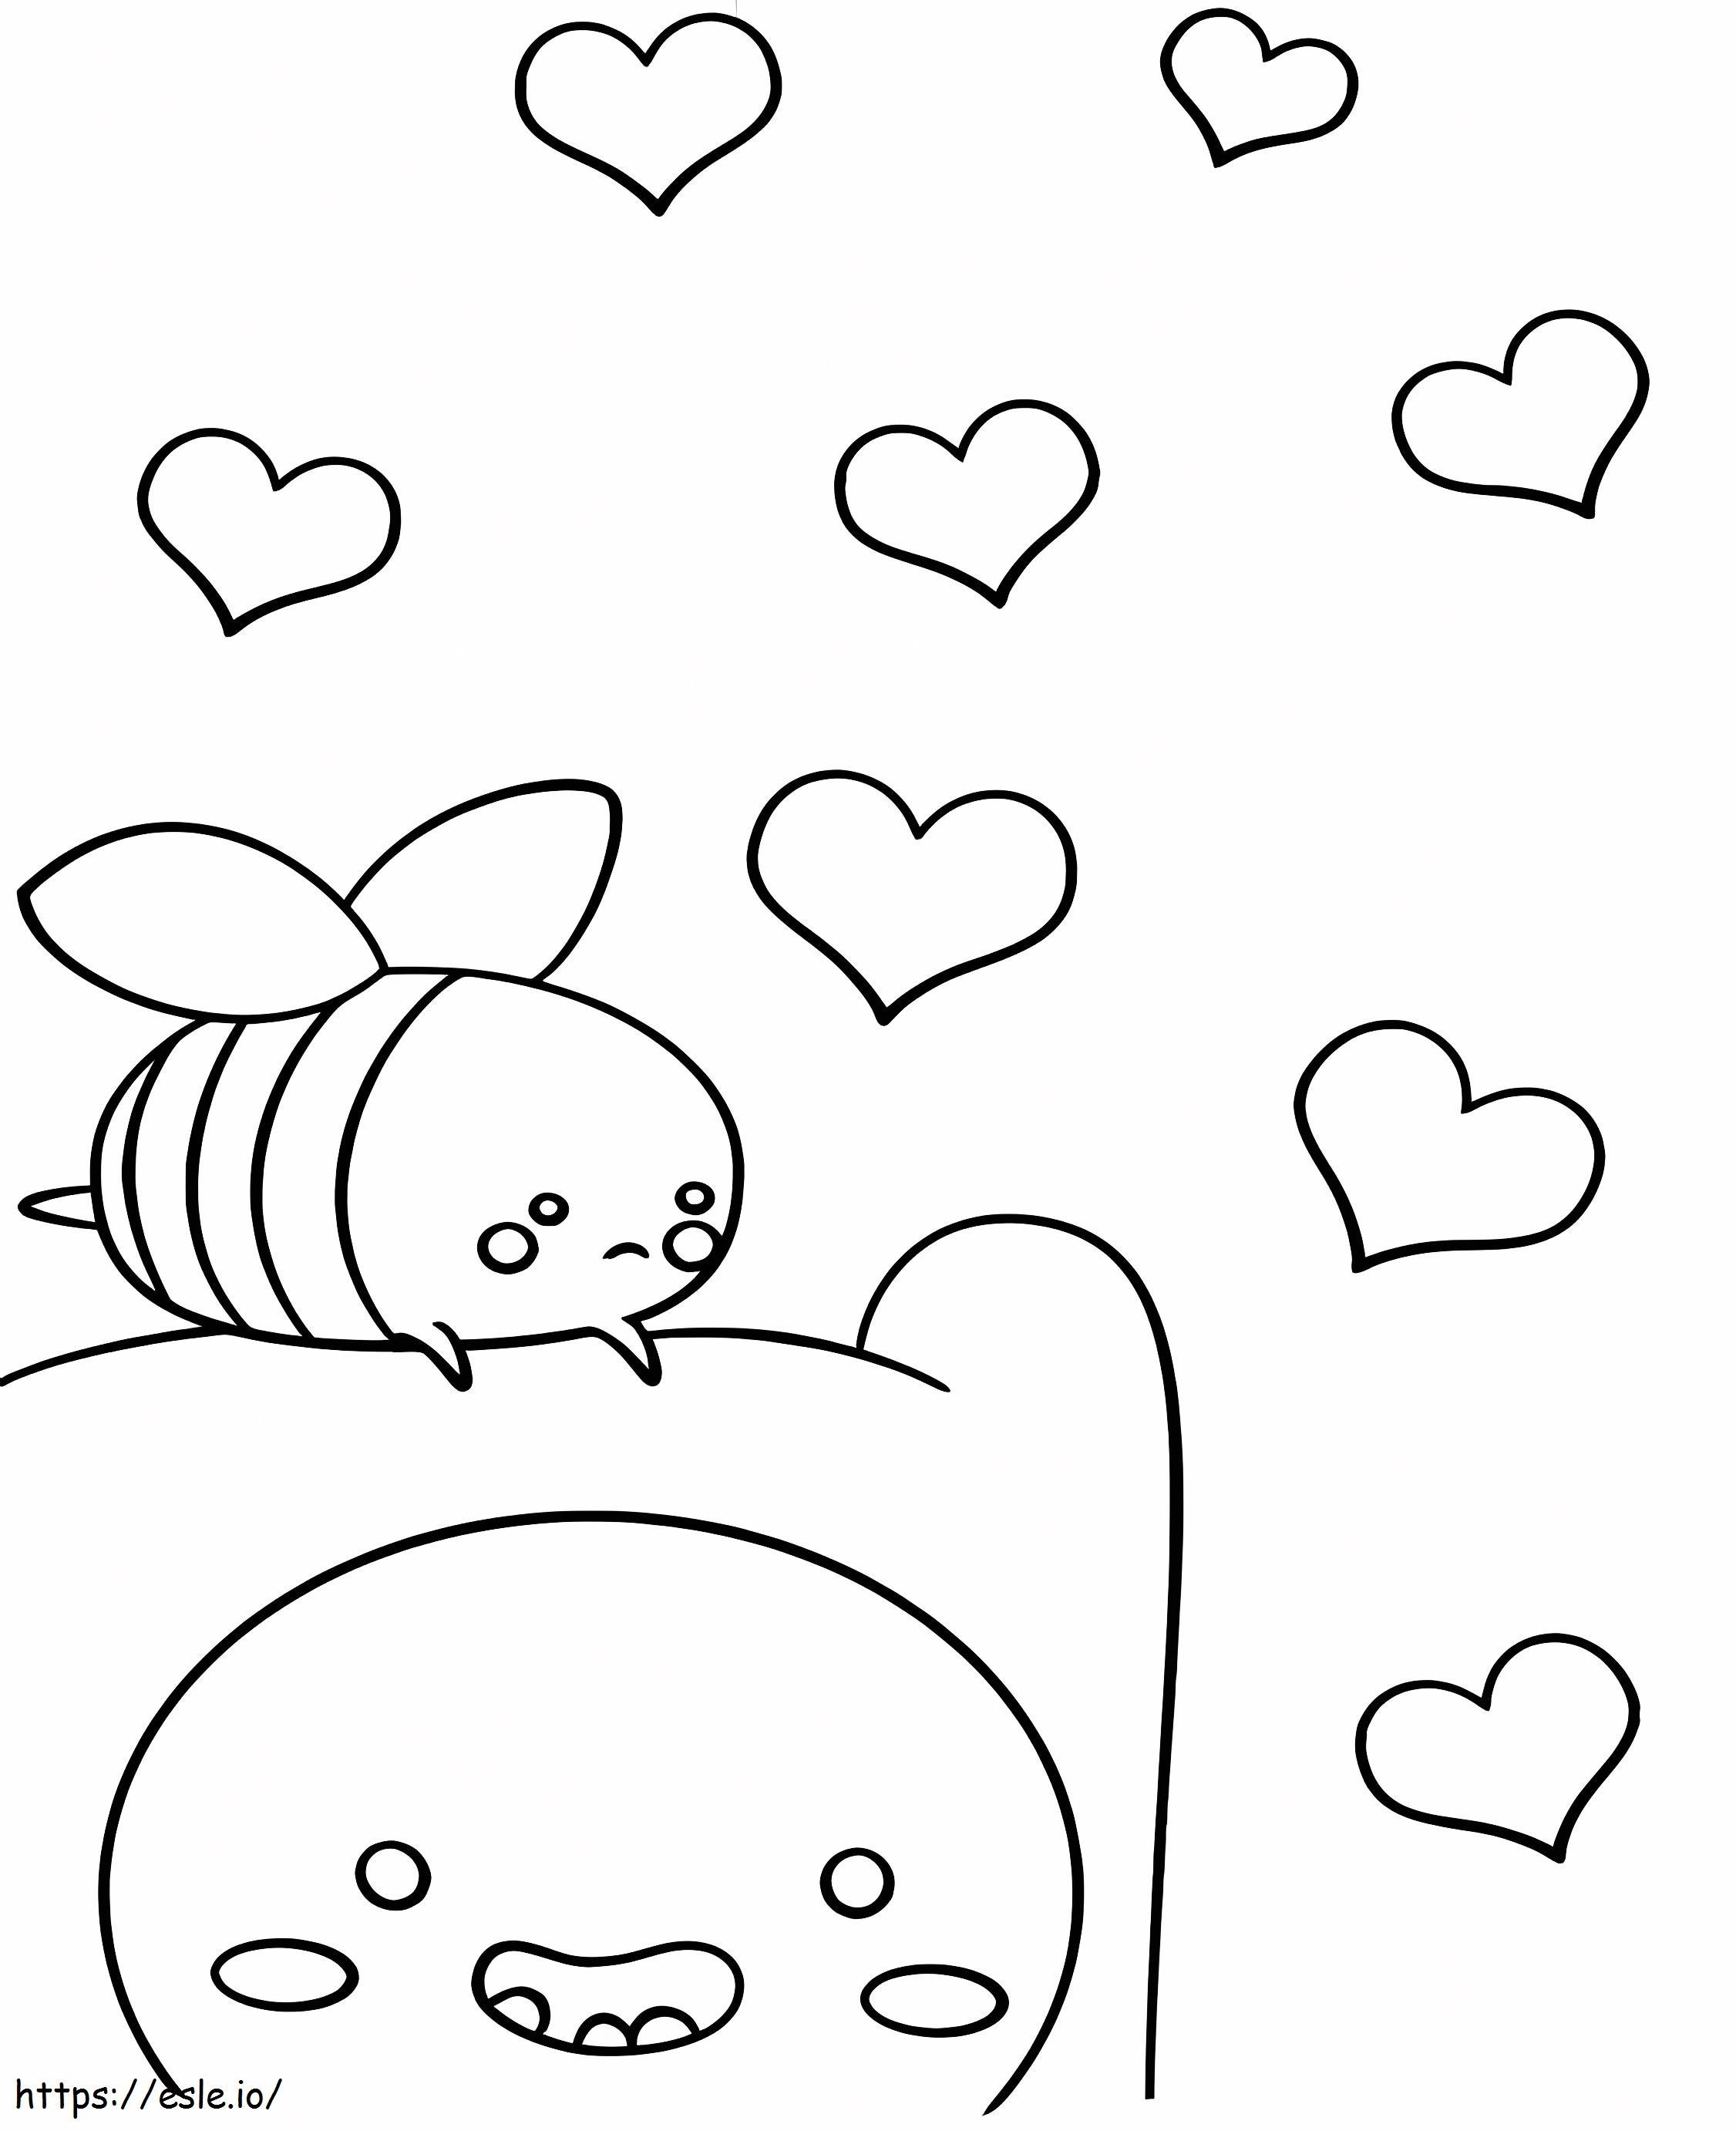 Kawaii Bee coloring page